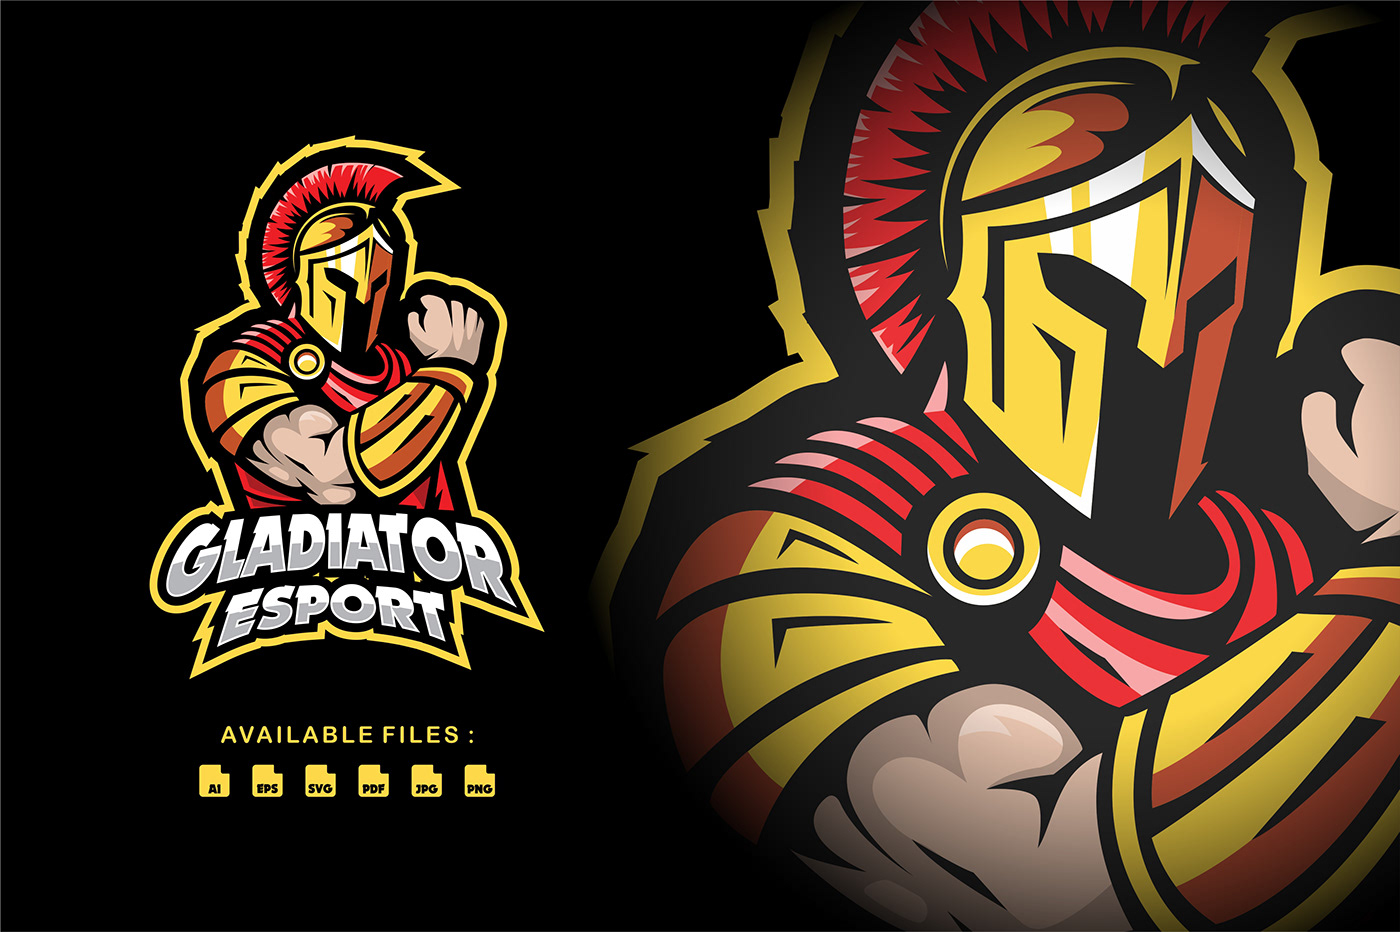 Gladiator esport logo design brand identity game sparta warrior greek Greece